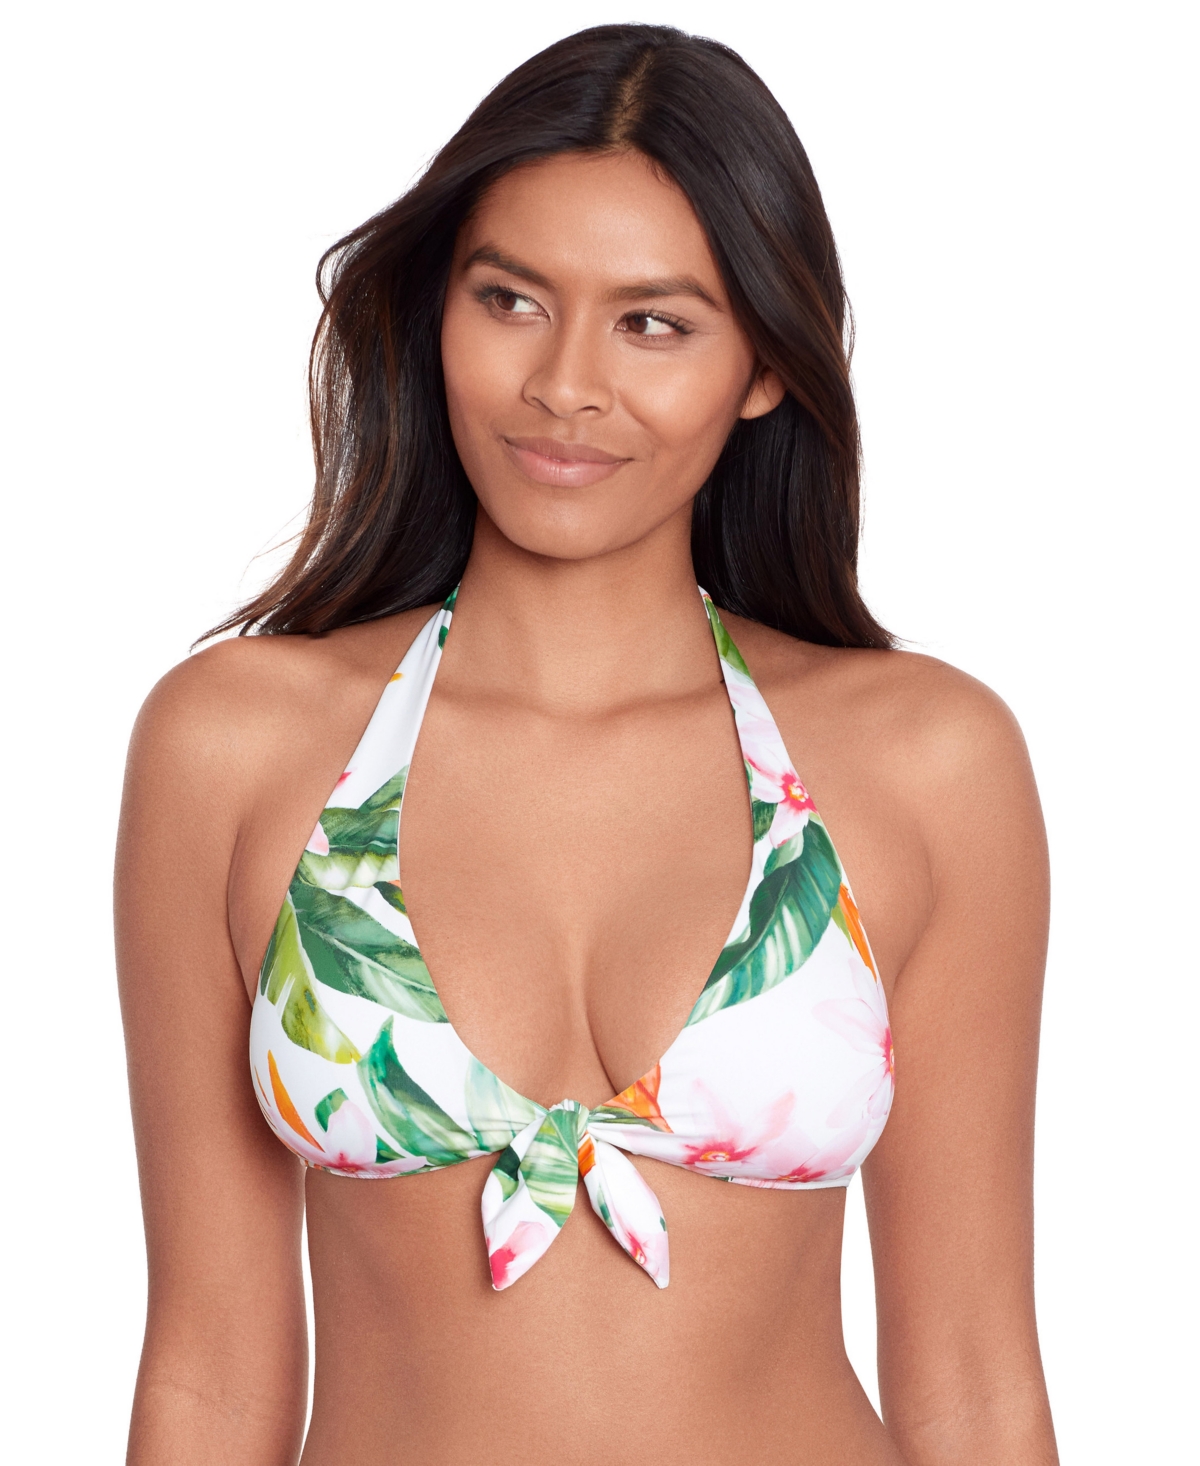 Women's Tropical-Print Tie-Front Bikini Top - Multi